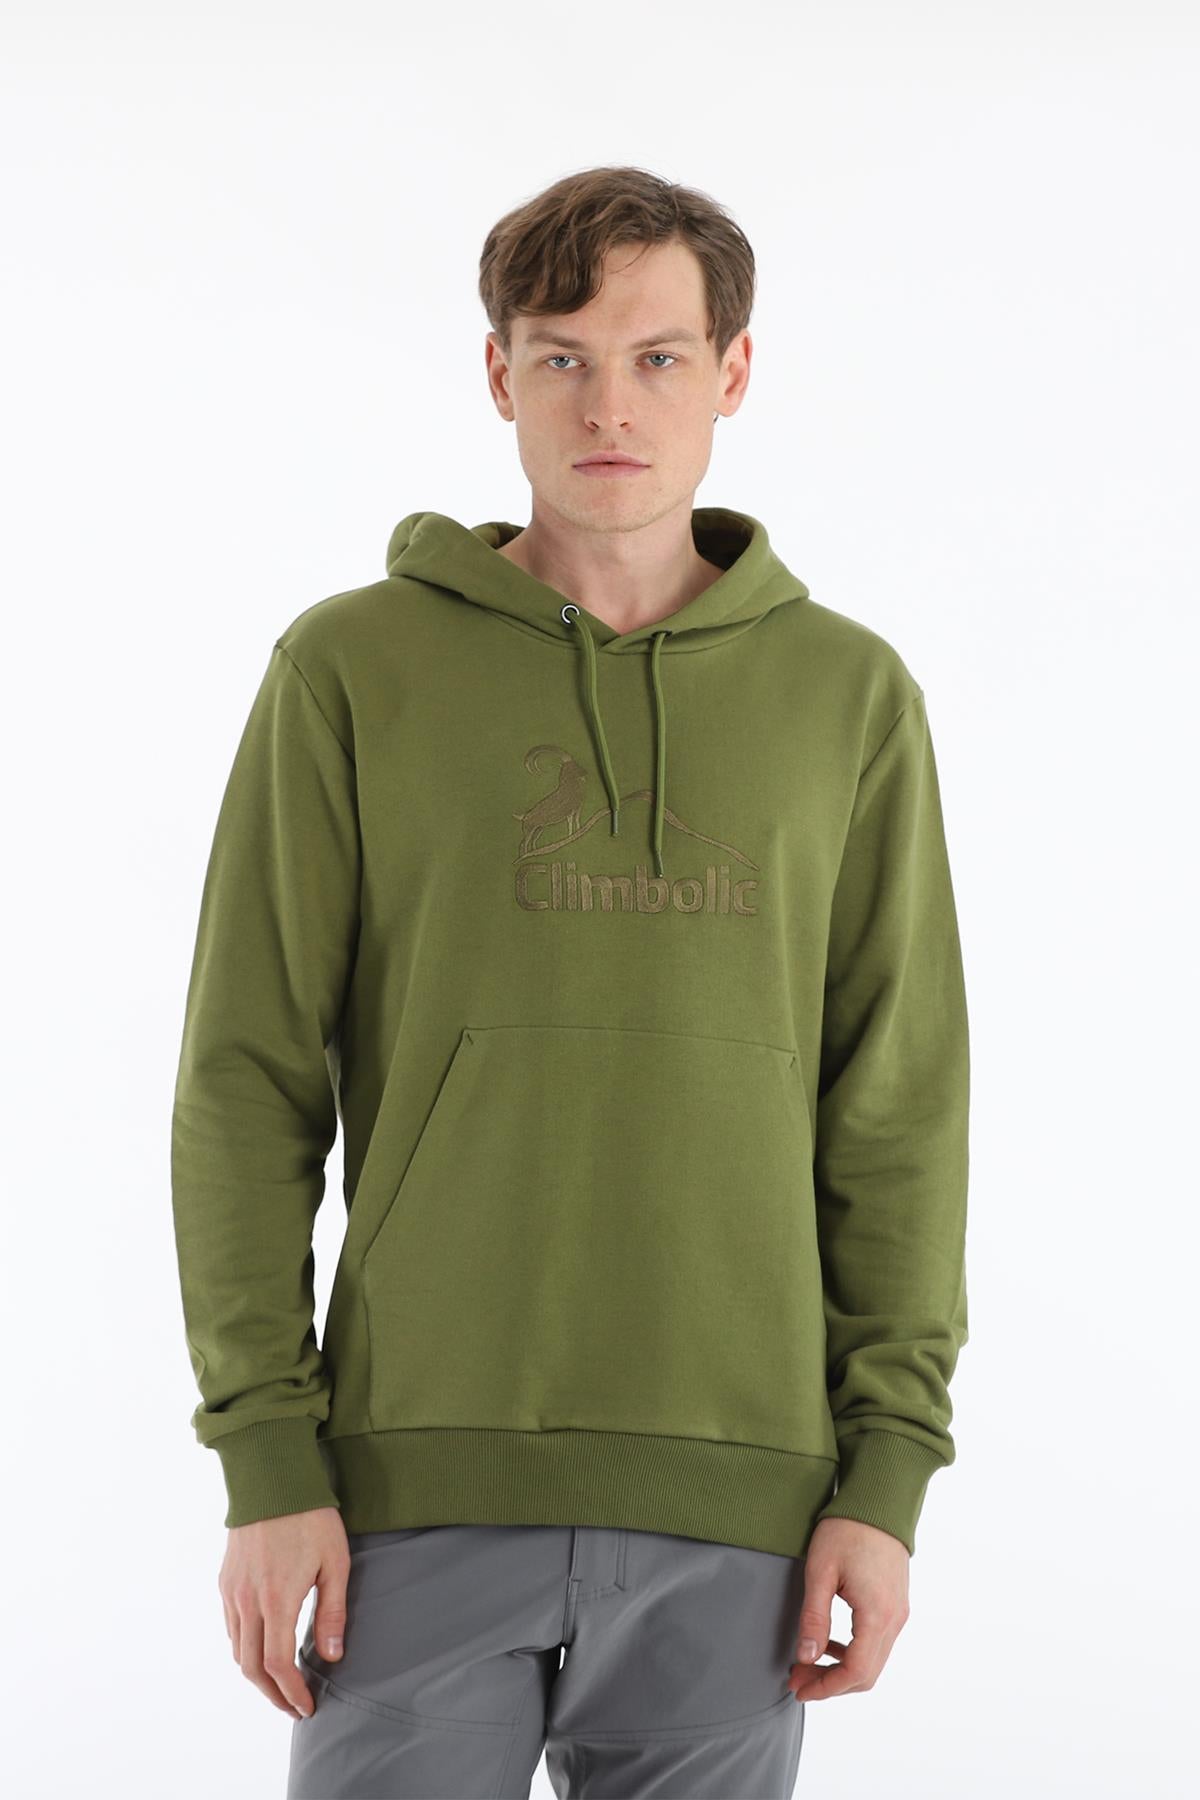 Climbolic Bronze Kapüşonlu Unisex Sweatshirt